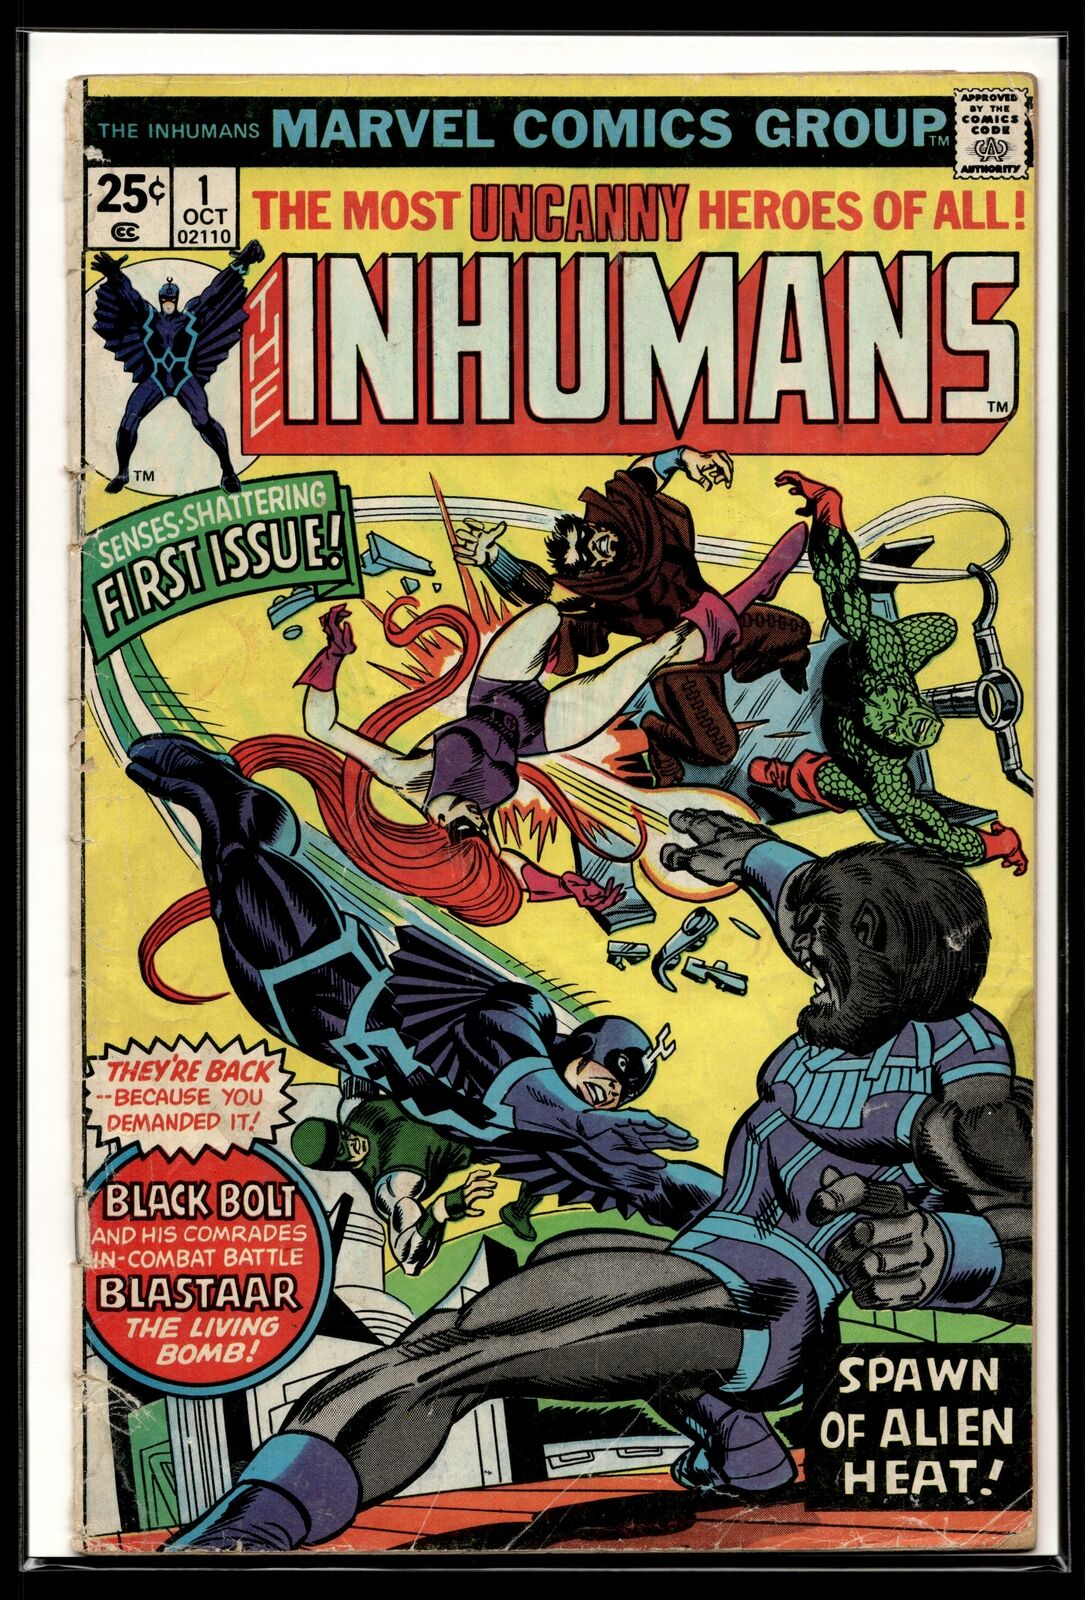 1975 The Inhumans #1 Marvel Comic